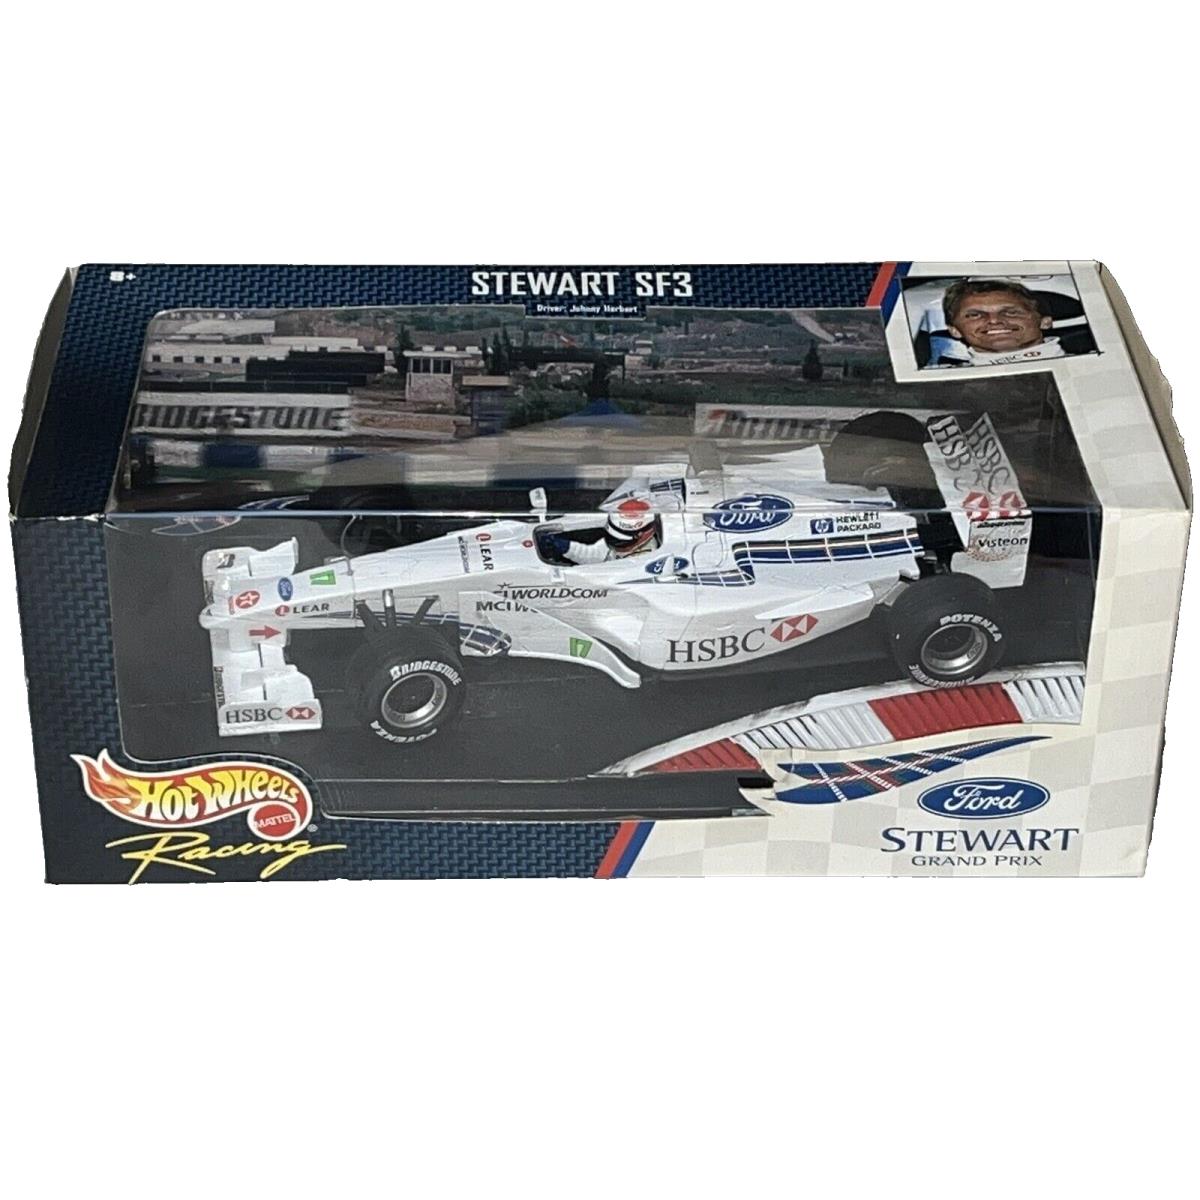 Hotwheels Stewart-ford SF3 Grand Prix Johnny Herbert 1:18 Diecast 1999